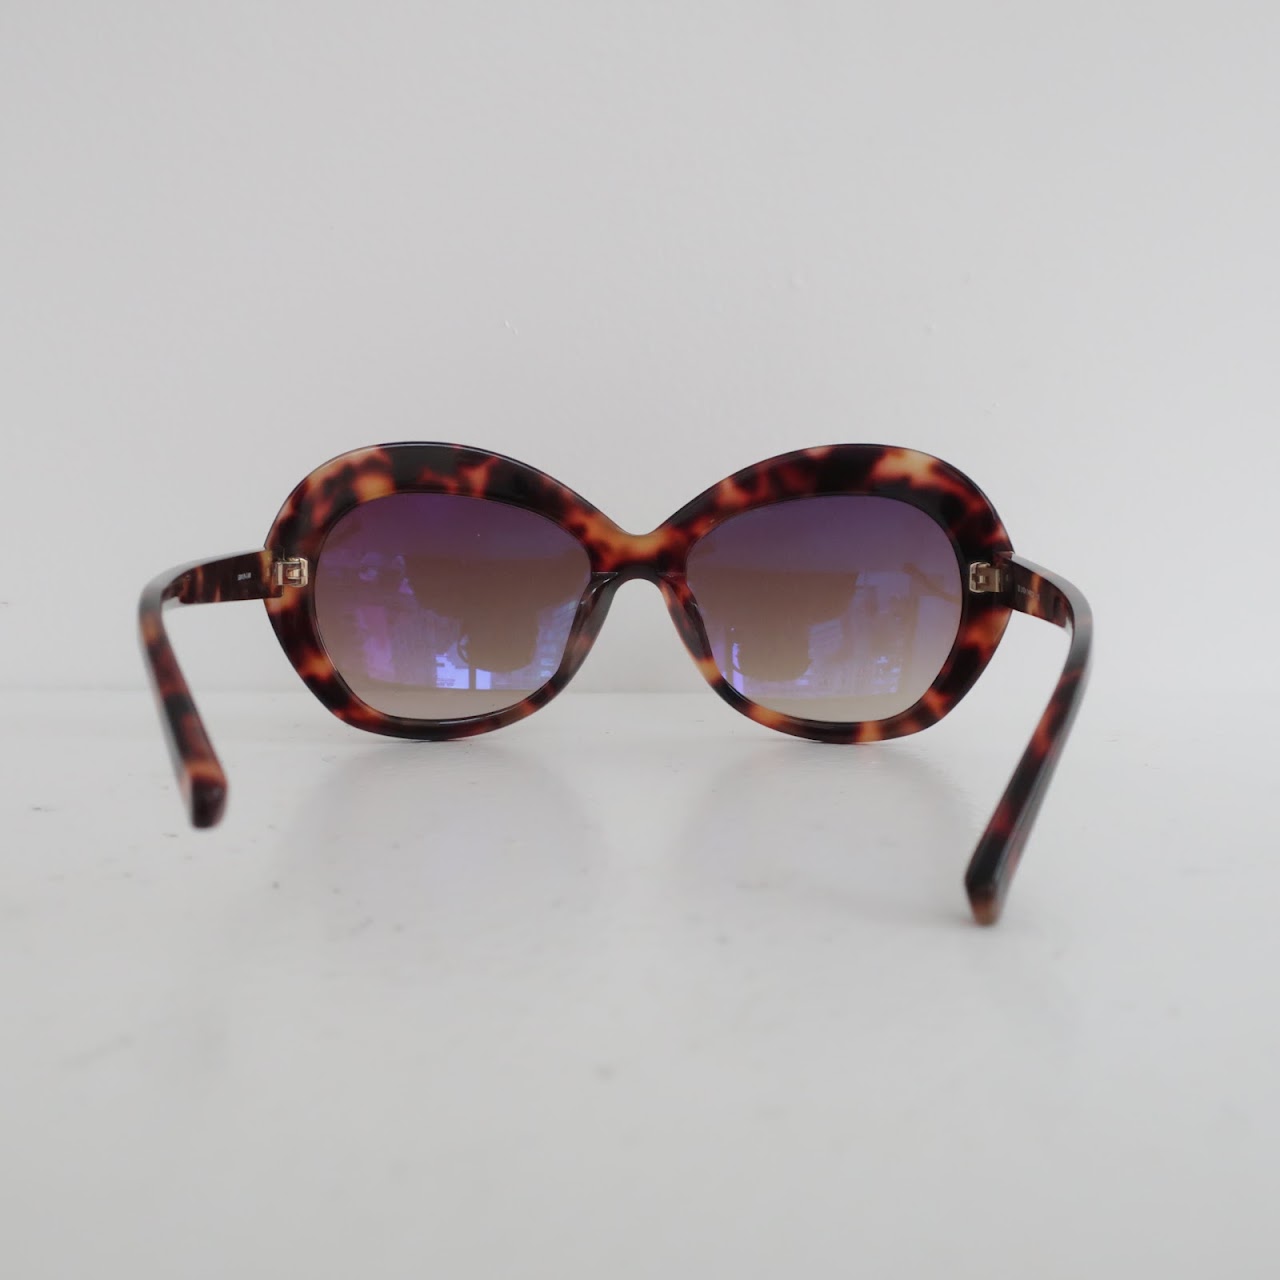 Linda Farrow Luxe Faceted Cat Eye Sunglasses